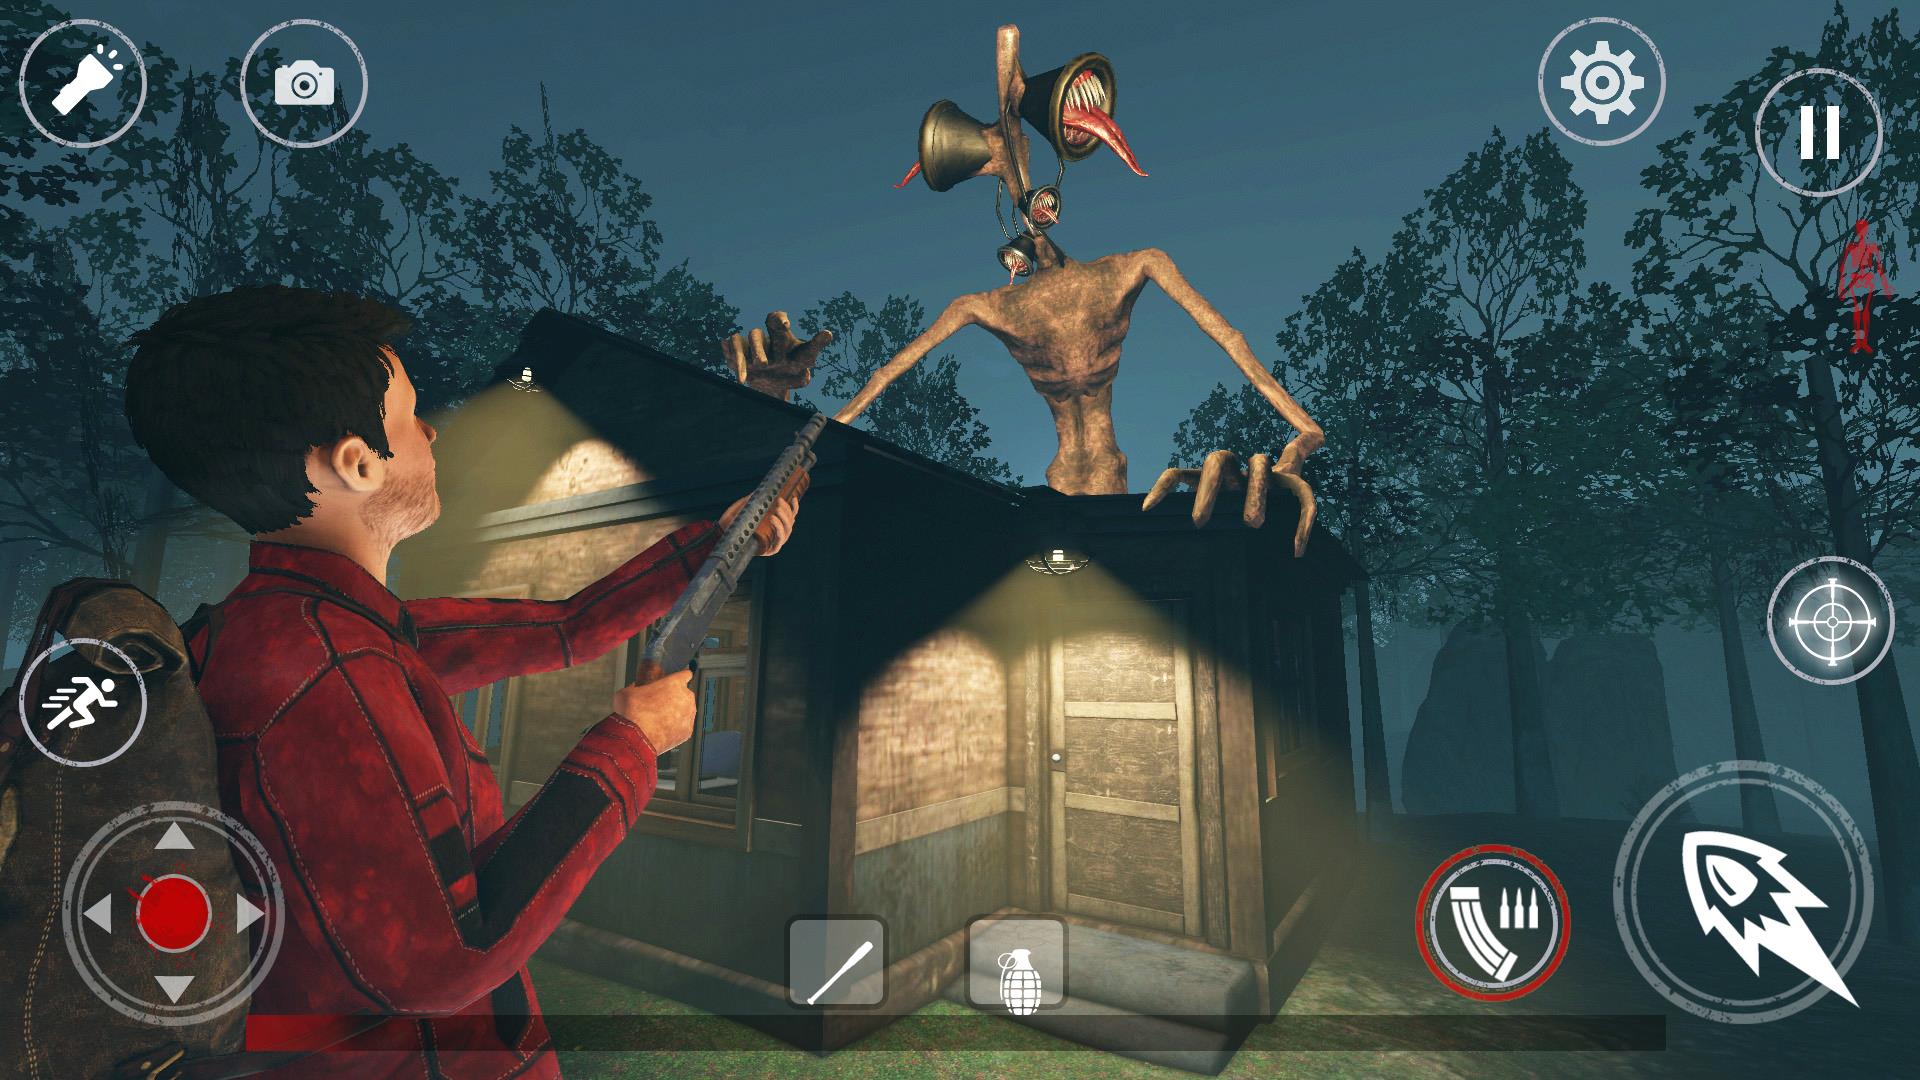 Siren Scary Head - Horror Game Screenshot 7